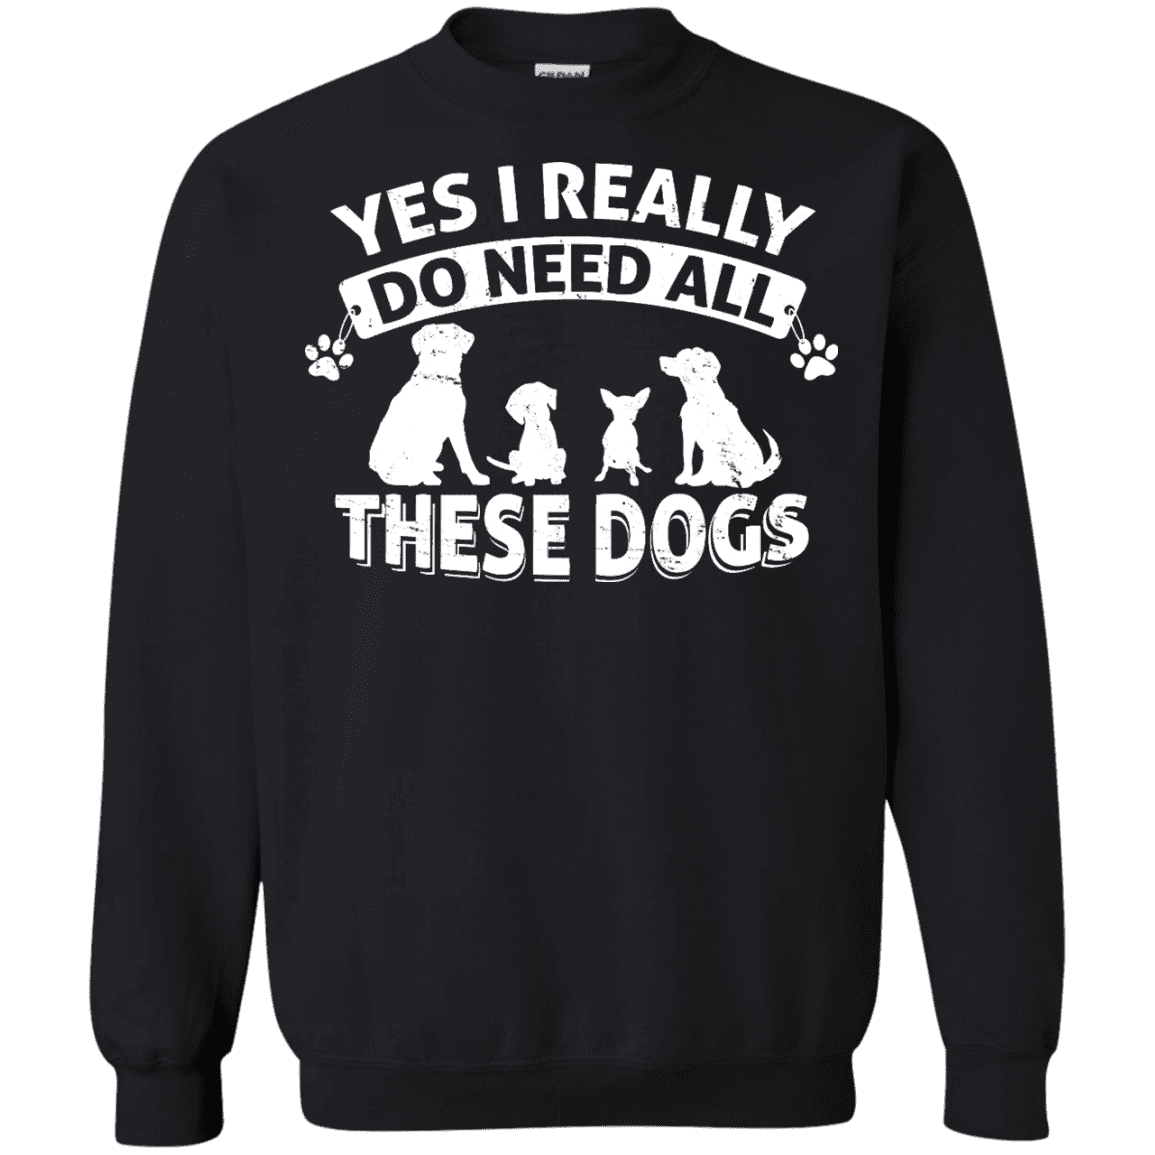 Yes I Need All These Dogs - Sweatshirt.